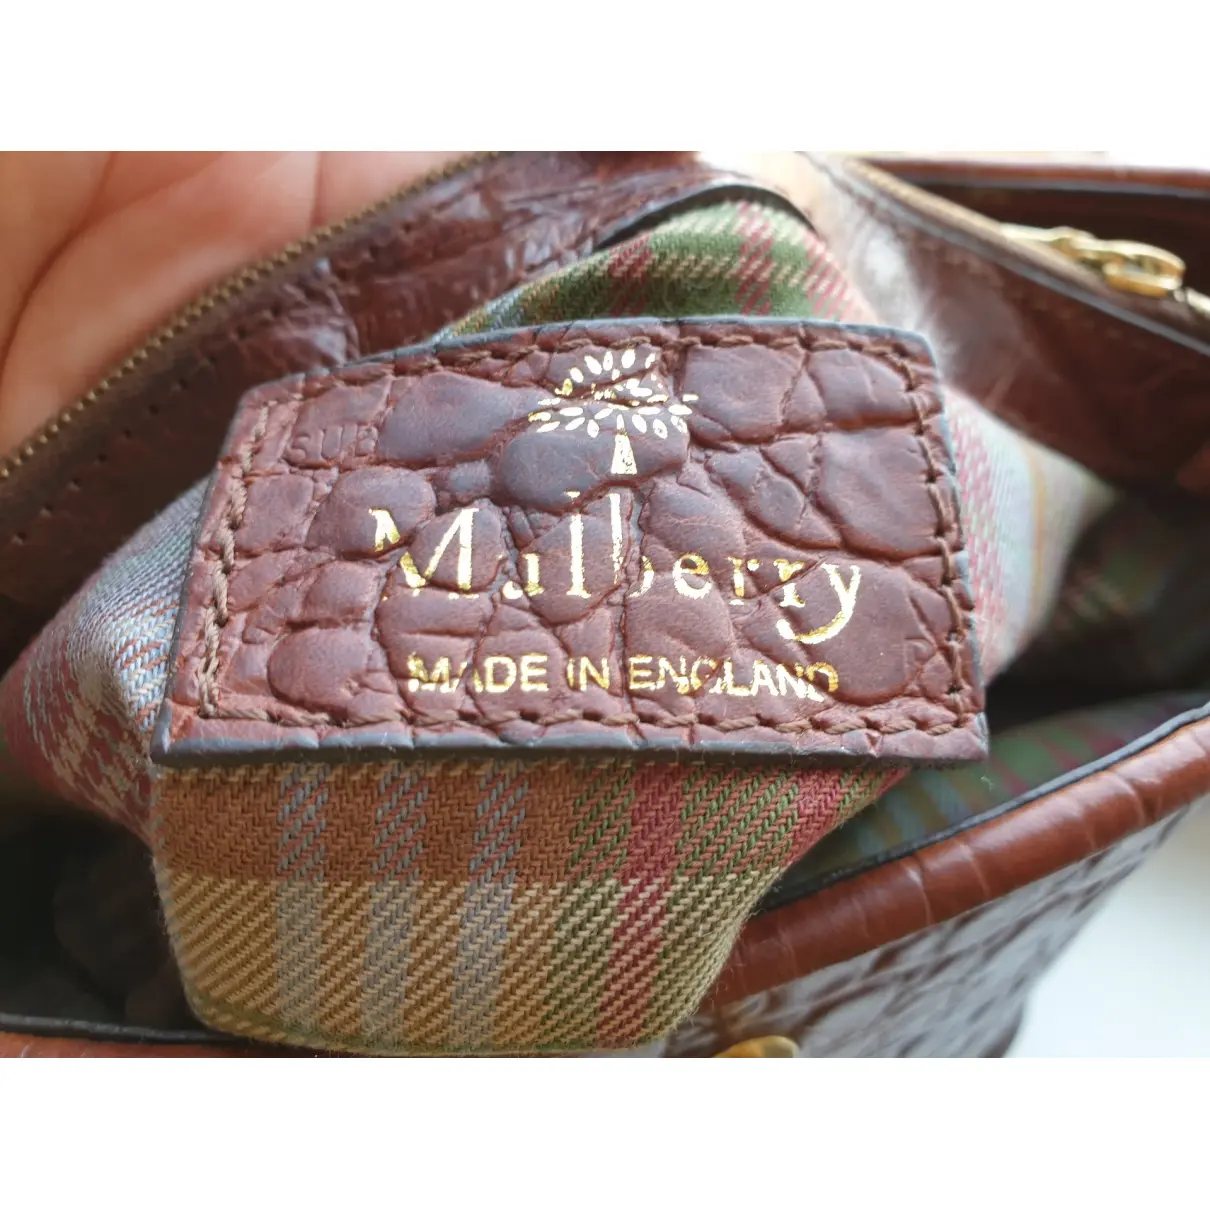 Luxury Mulberry Handbags Women - Vintage